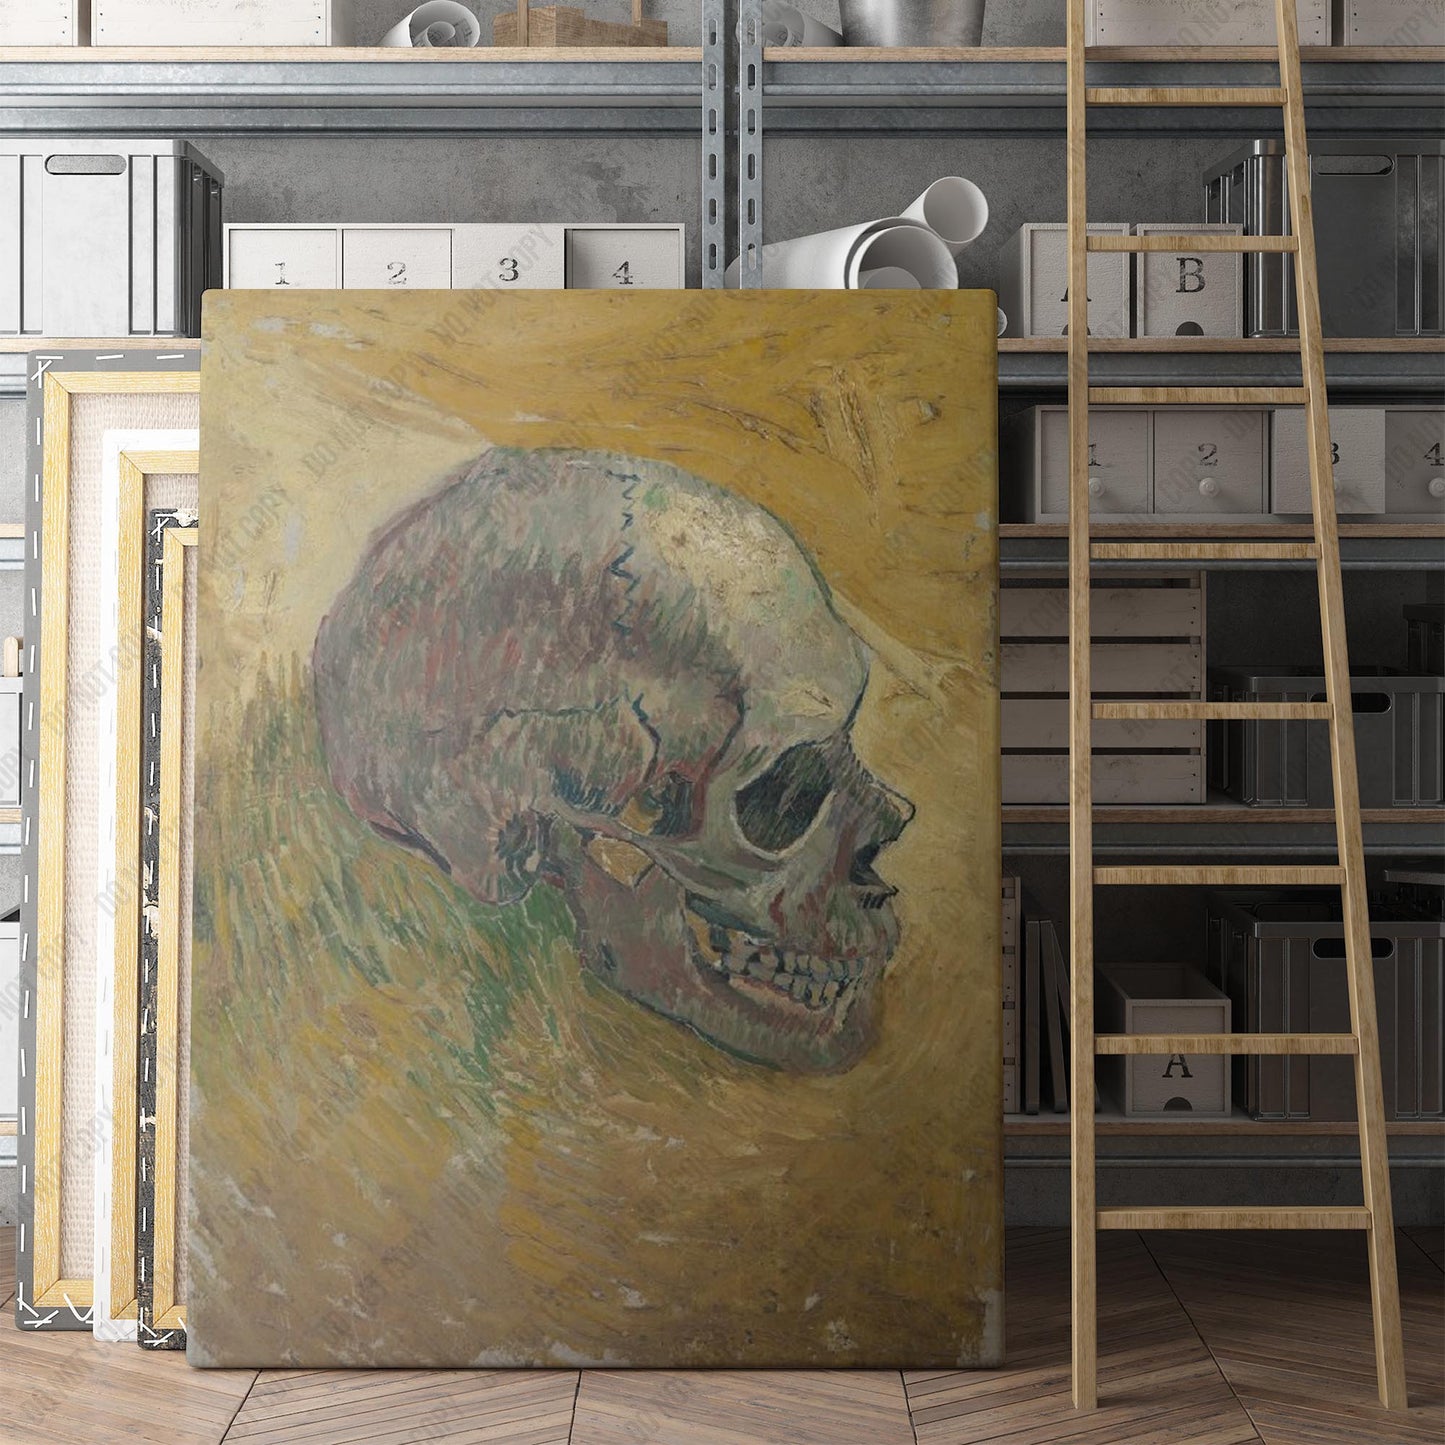 Skull (1887) by Van Gogh